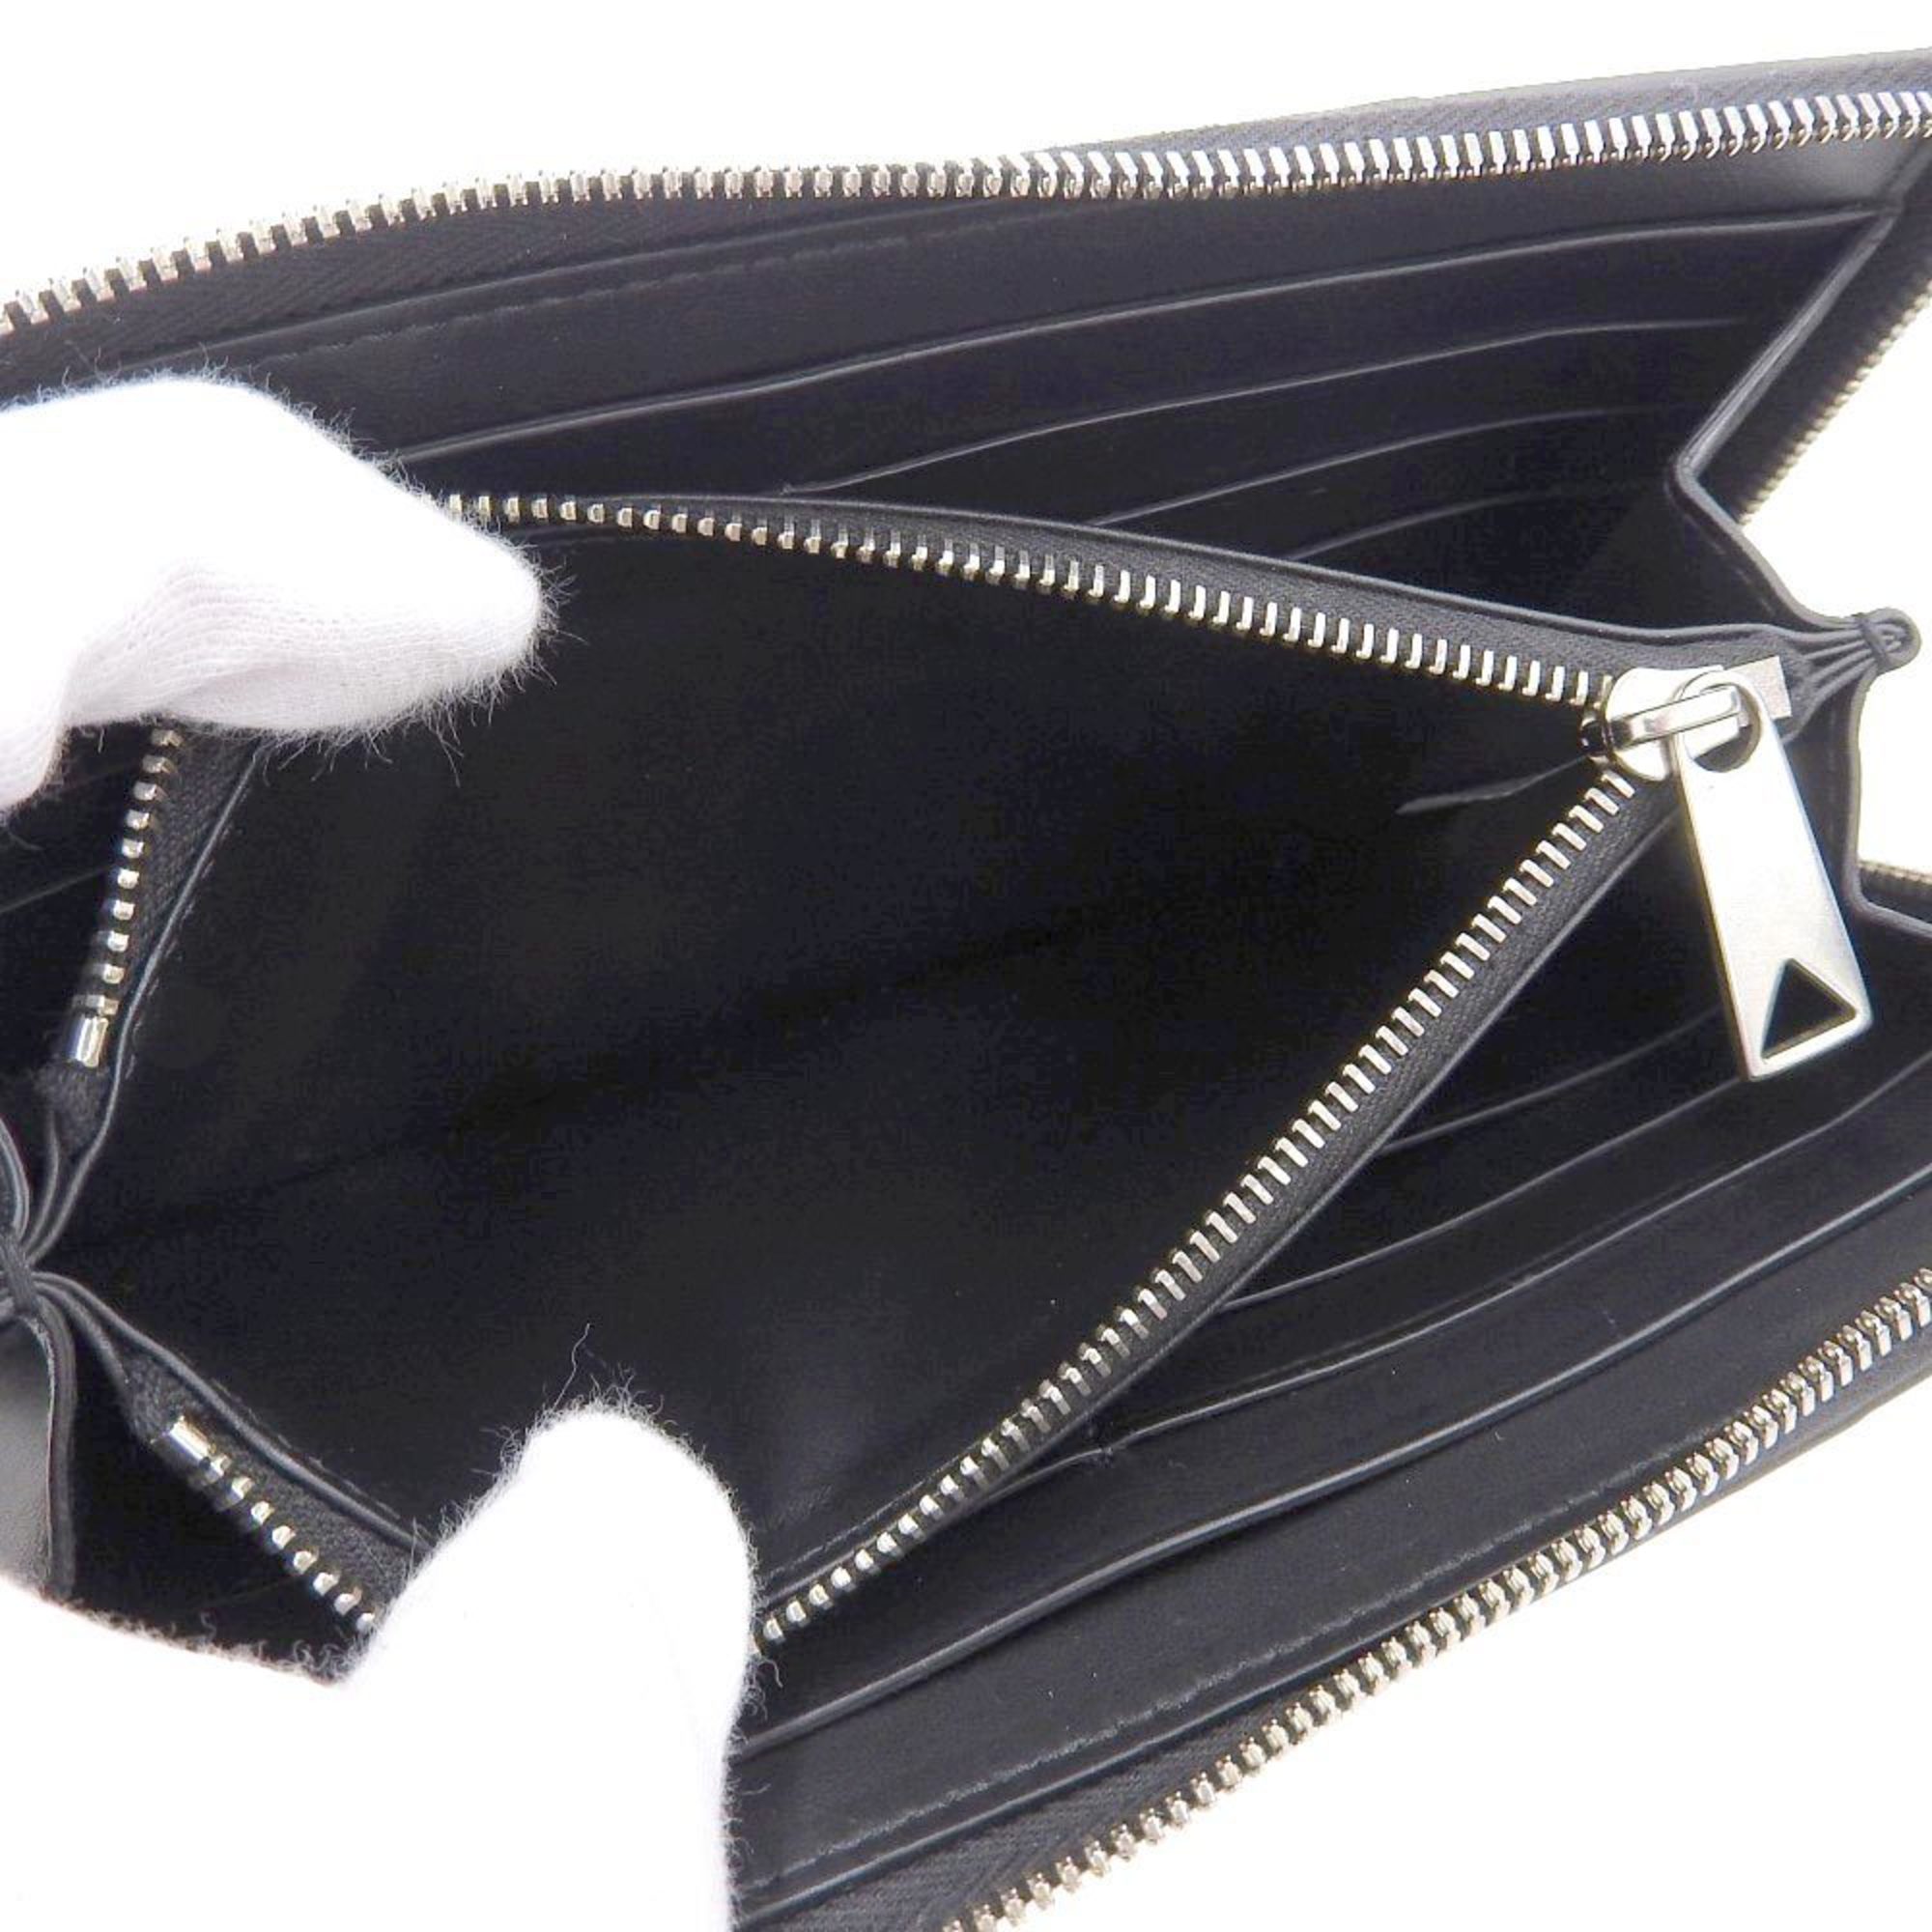 BOTTEGA VENETA Maxi Intrecciato Zip Around Wallet 690945 Long Leather Black